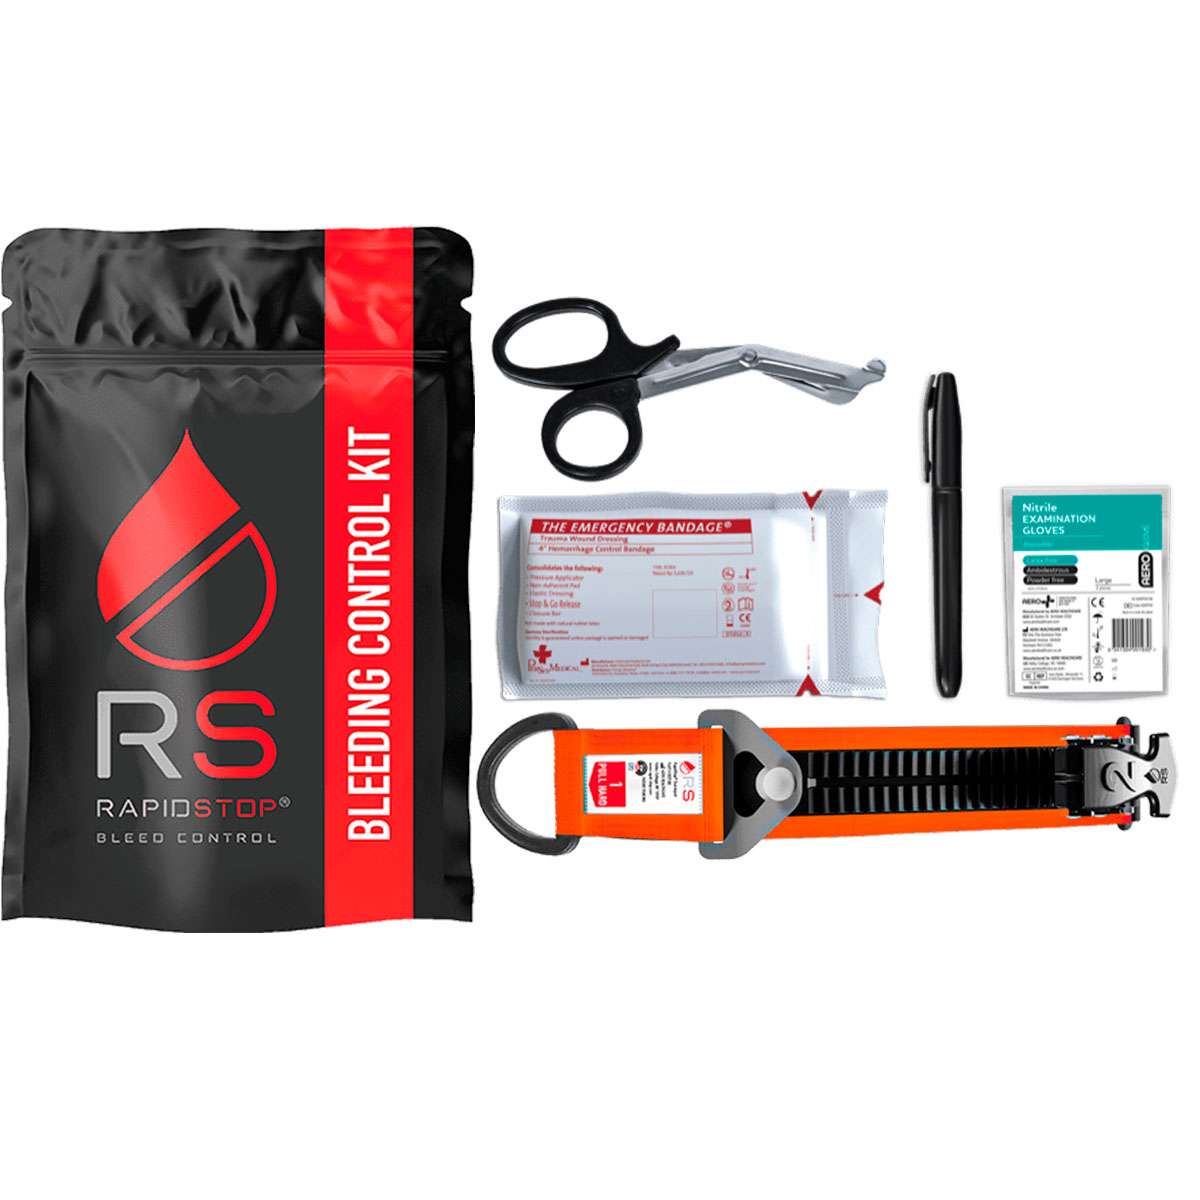 RAPIDSTOP Bleeding Control Kit